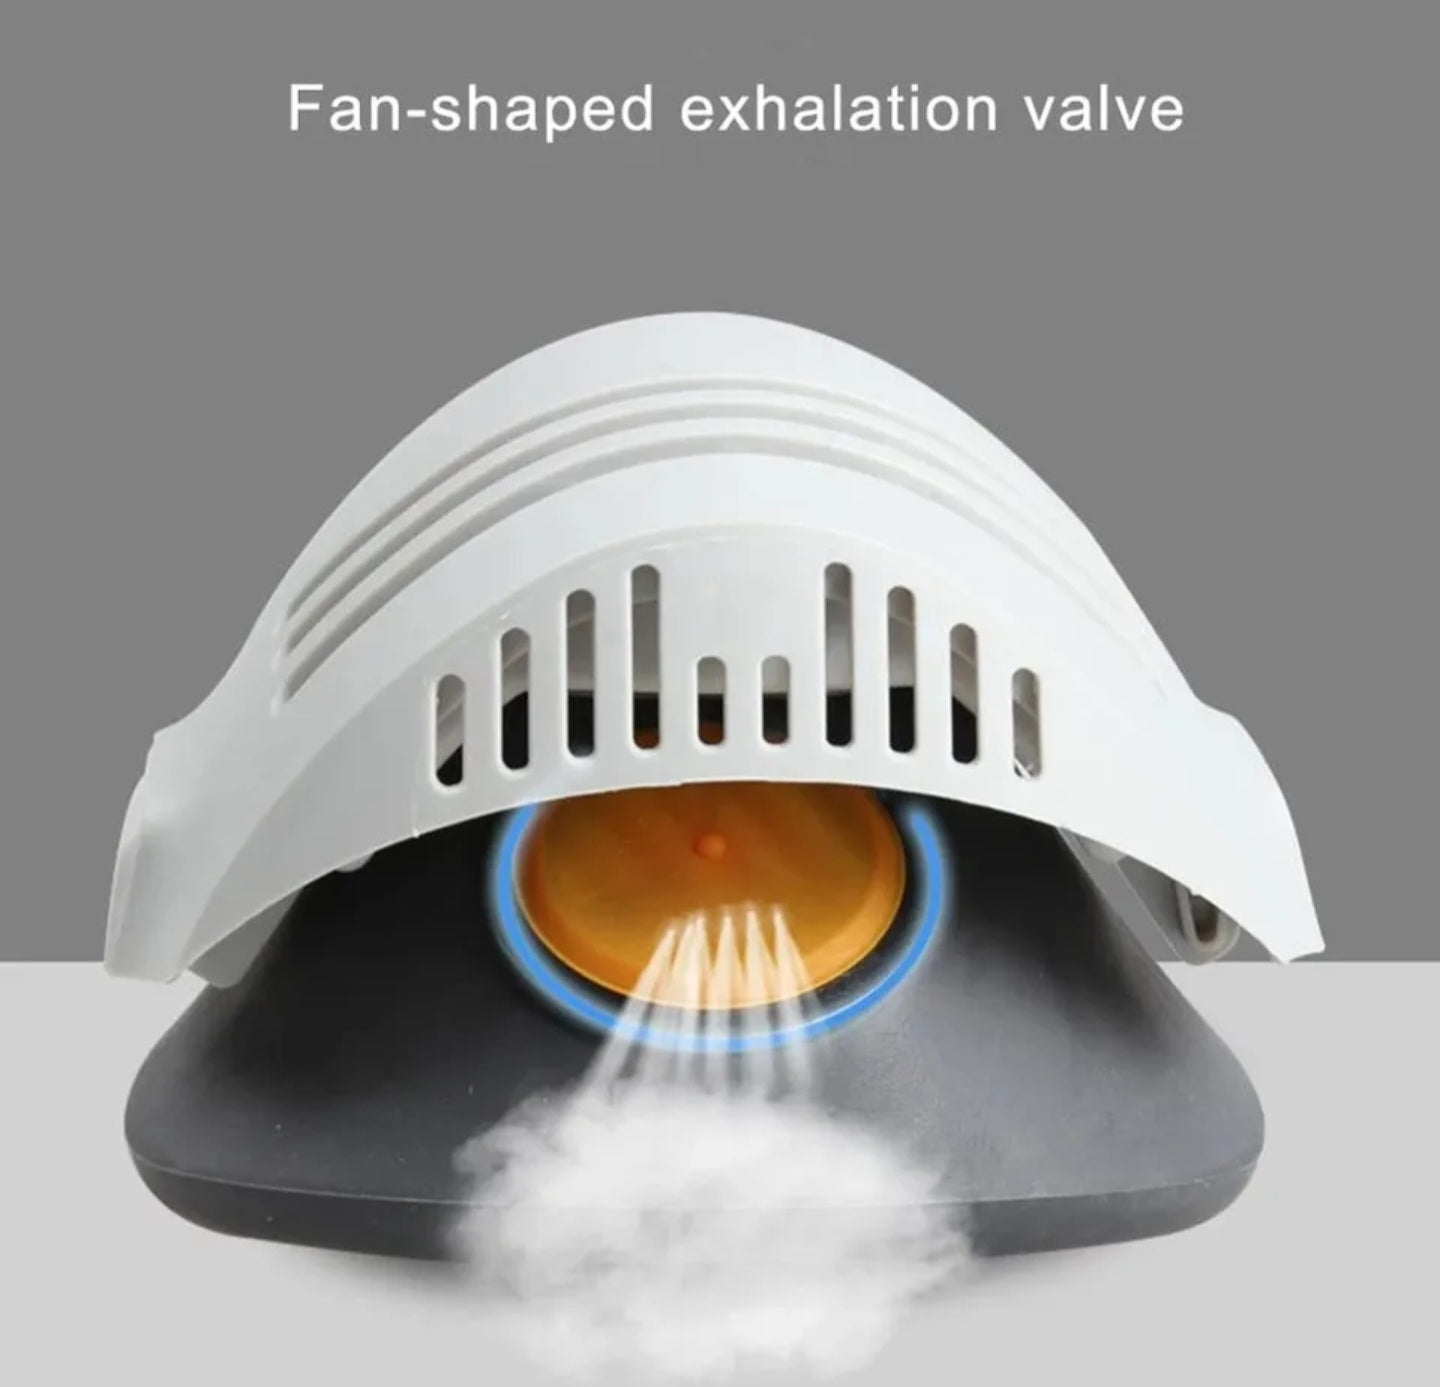 Single Filter Spray Paint Mask Dust Respirator